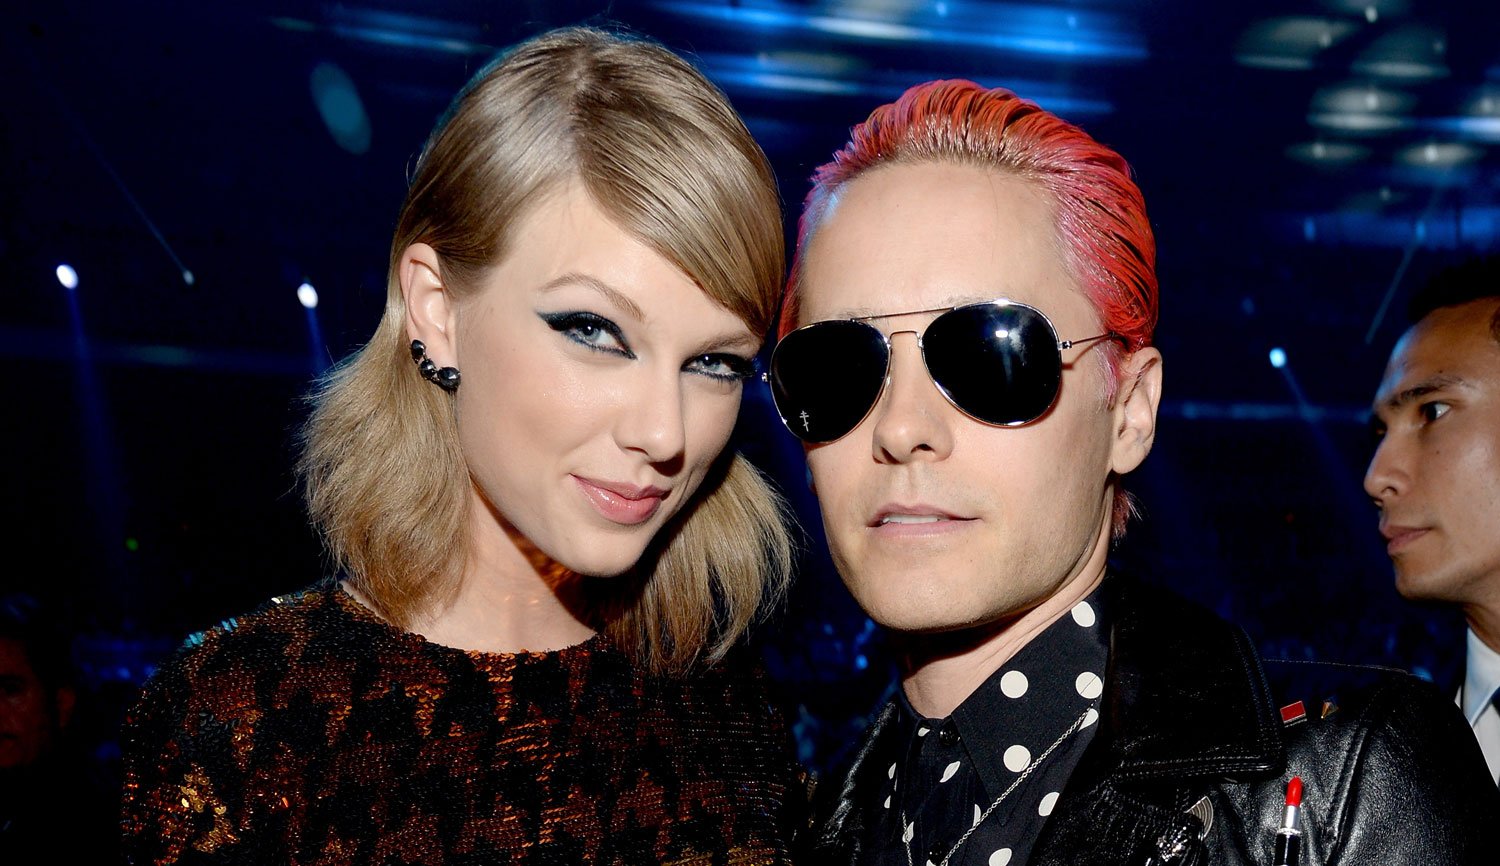 Jared Leto Loses Lawsuit Against TMZ Over Stolen Video Critiquing Taylor Swift